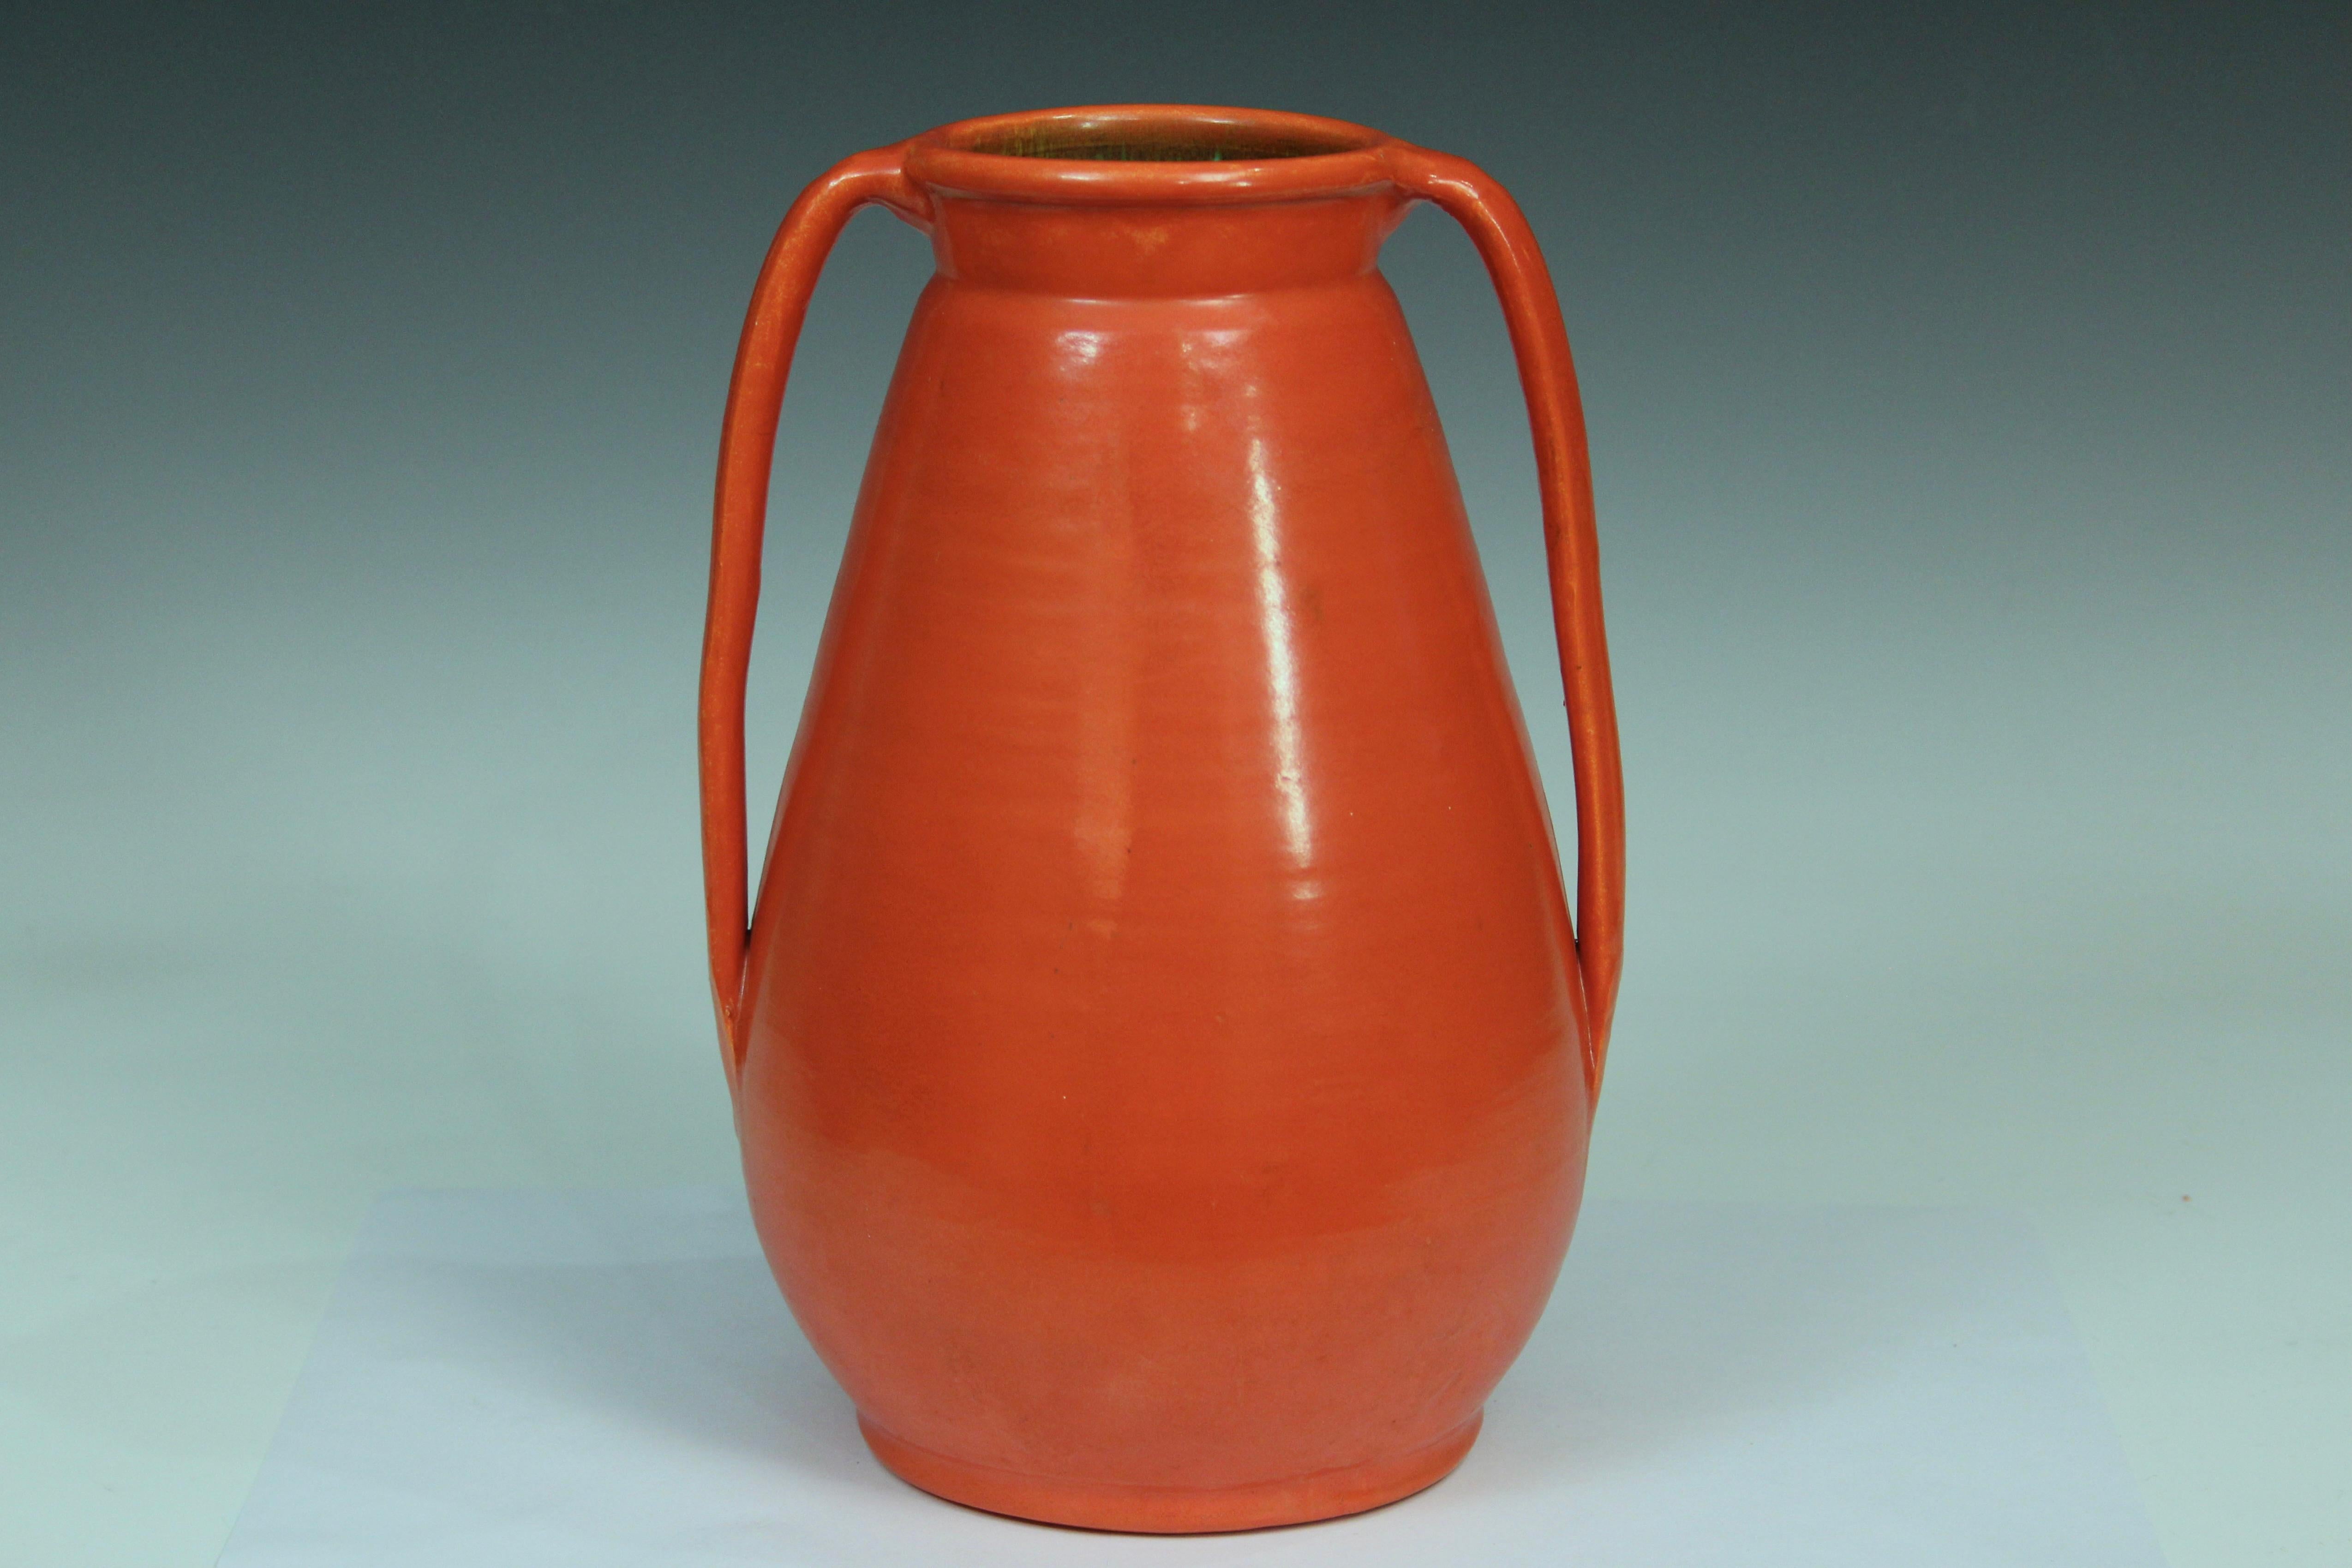 Big hand turned Stangl Art Deco vase in striking chrome orange monochrome glaze, circa early 20th century. 11 1/4